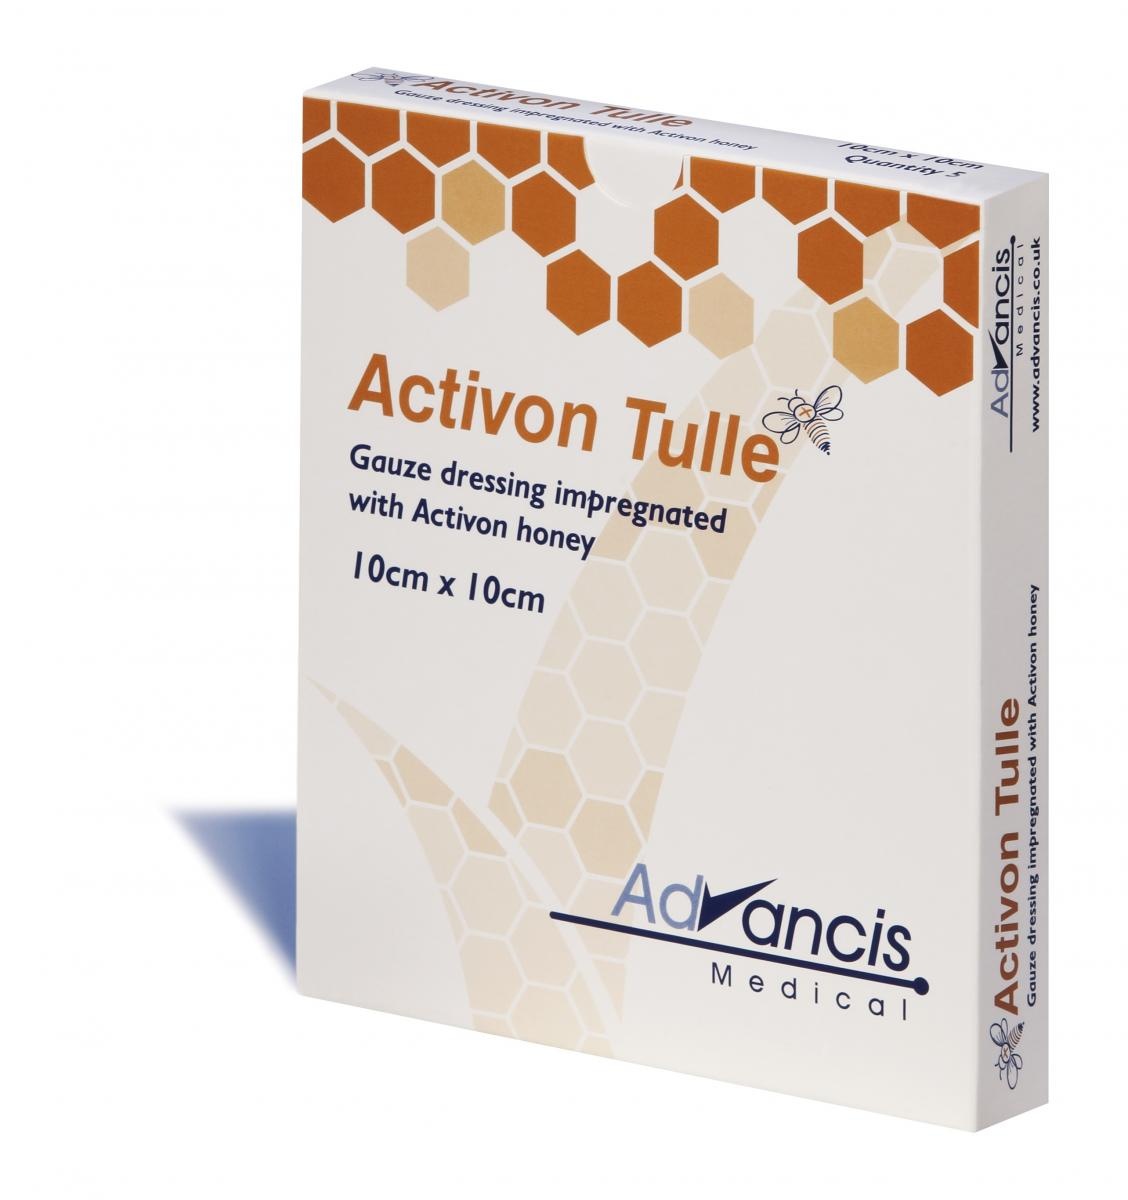 Activon Tulle Medical Manuka Honey 10cm x 10cm image 0